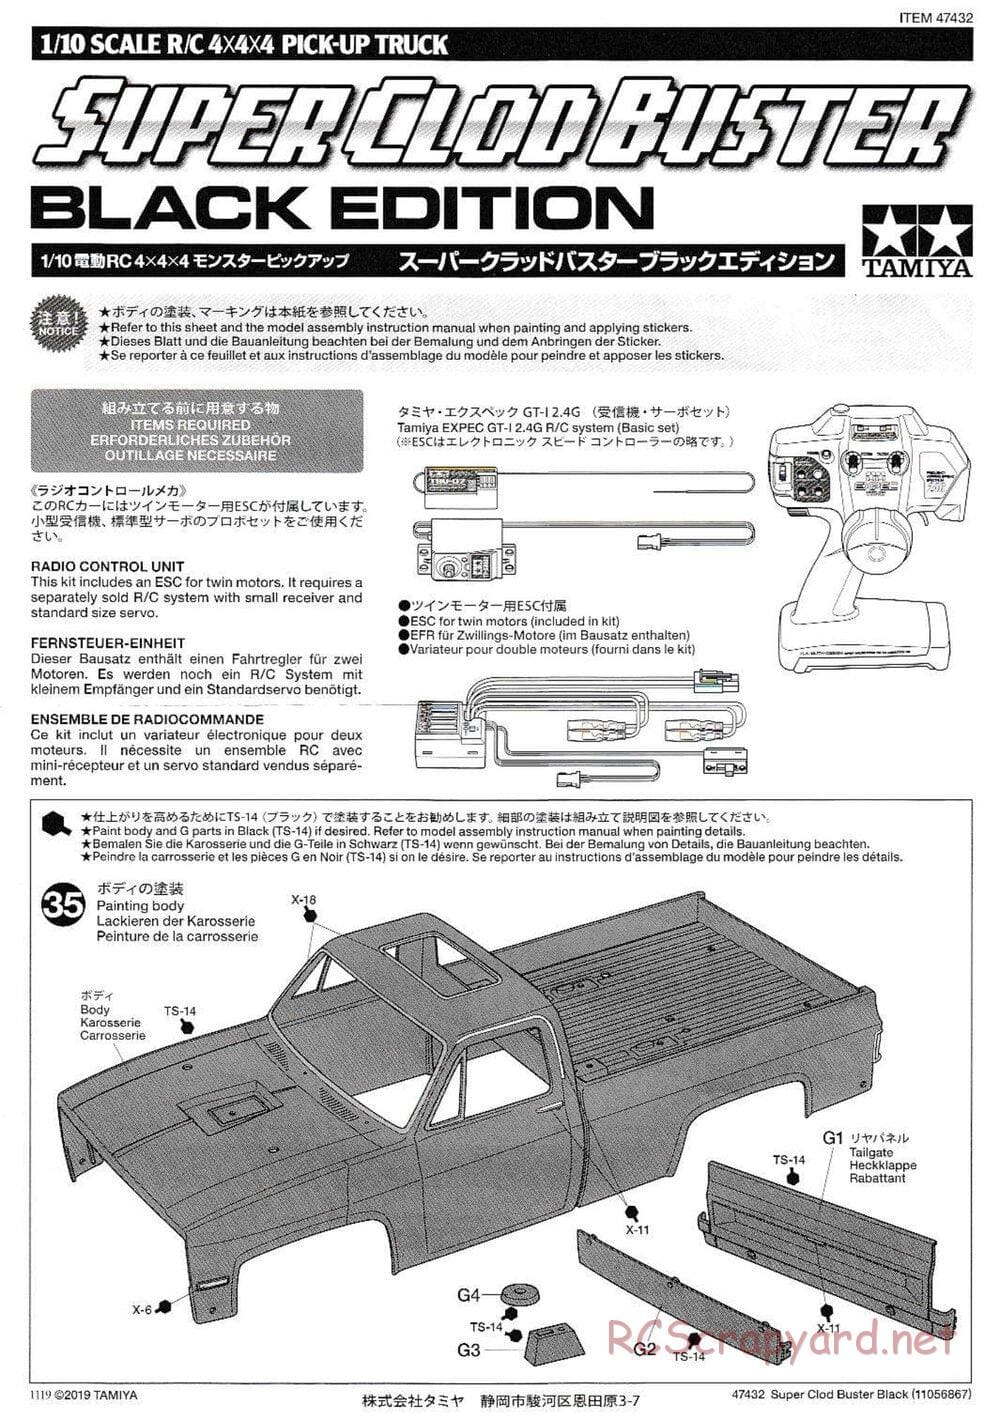 Tamiya - Super Clod Buster Black Chassis - Manual - Page 1